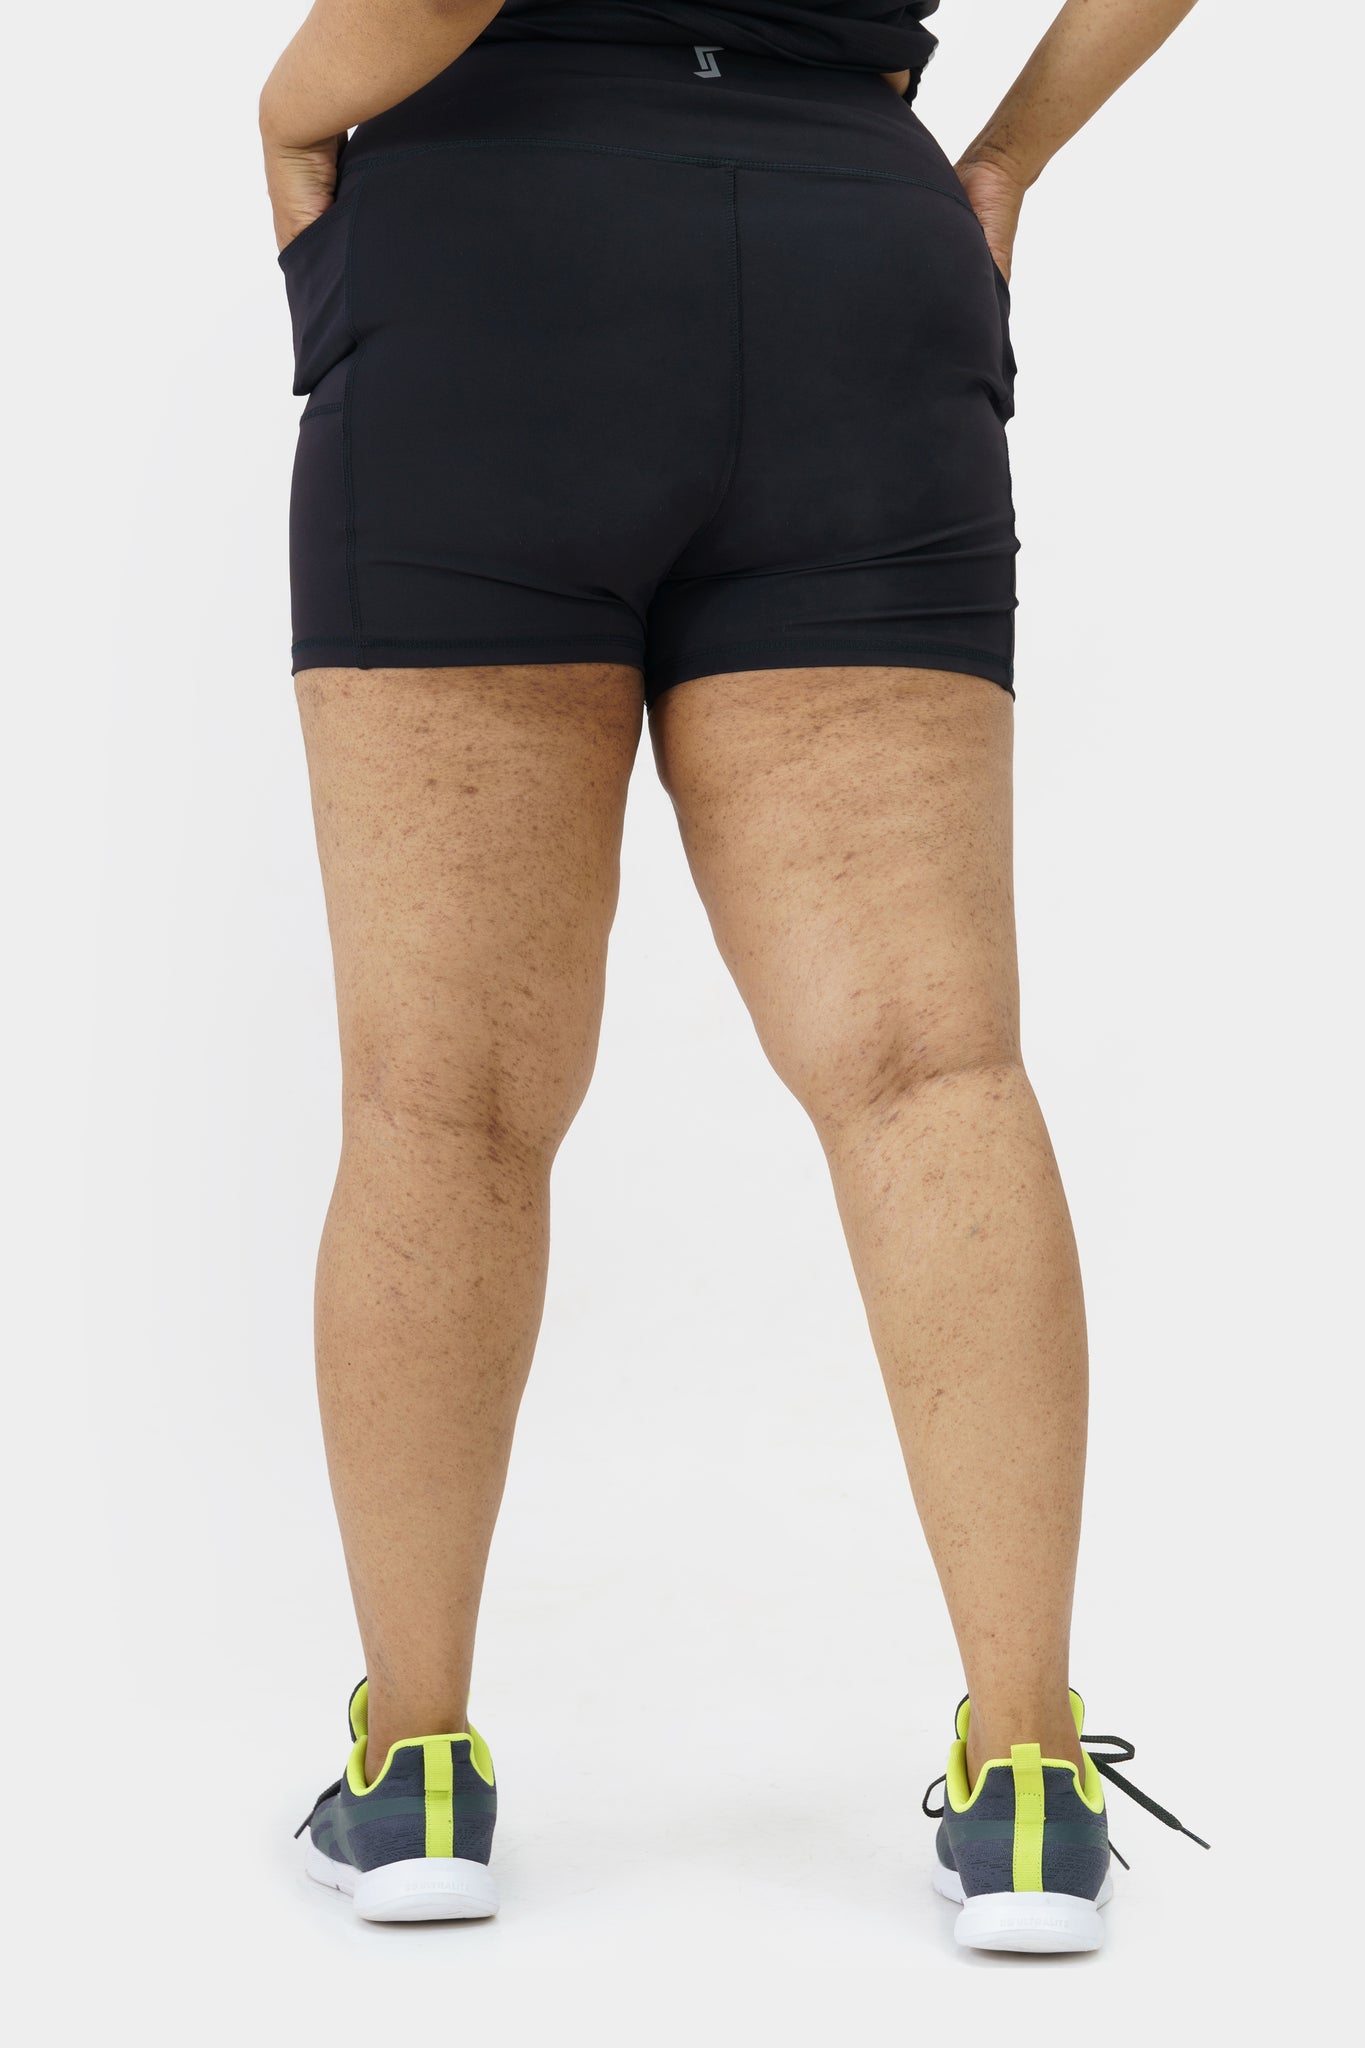 Hold Tight Biker Shorts: 4-inch inseam